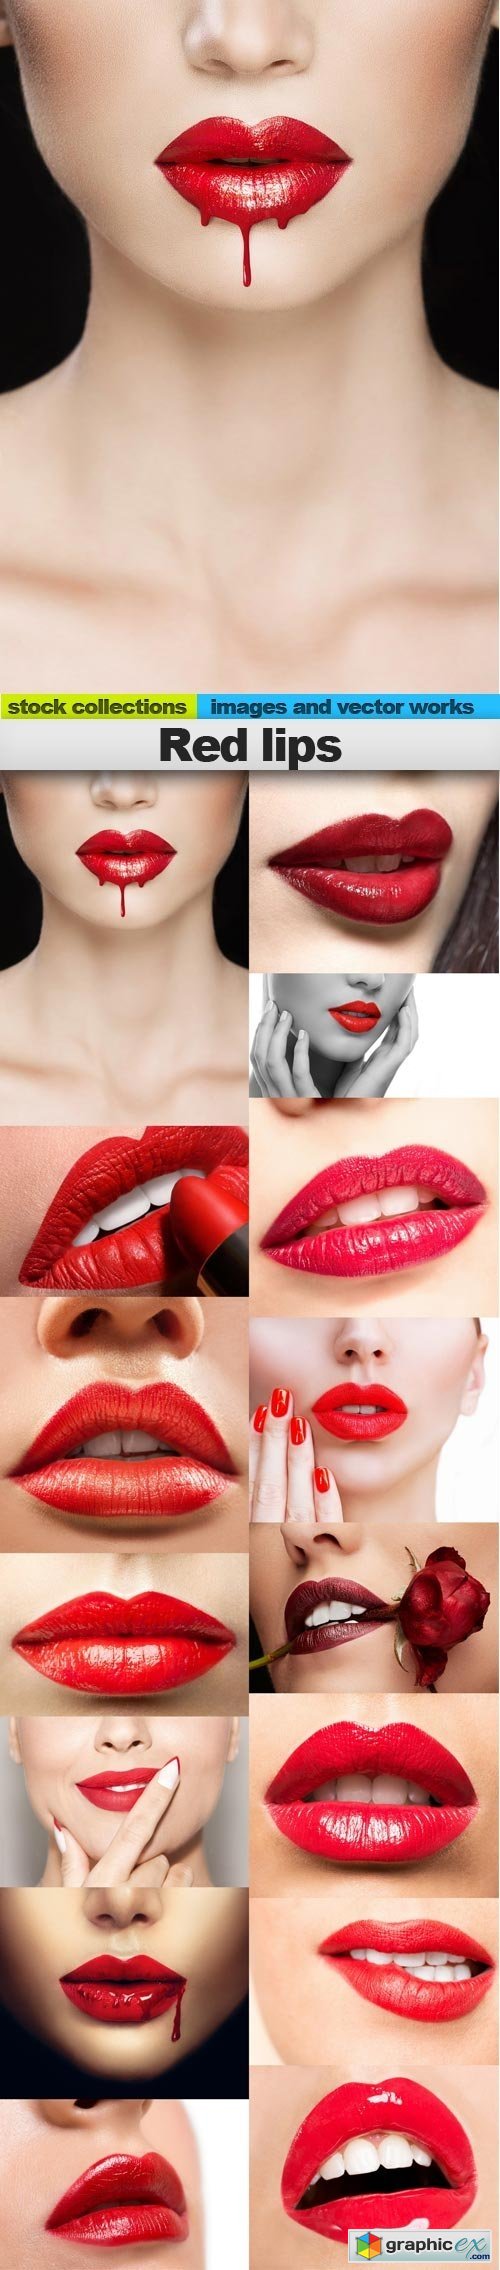 Red lips, 15 x UHQ JPEG